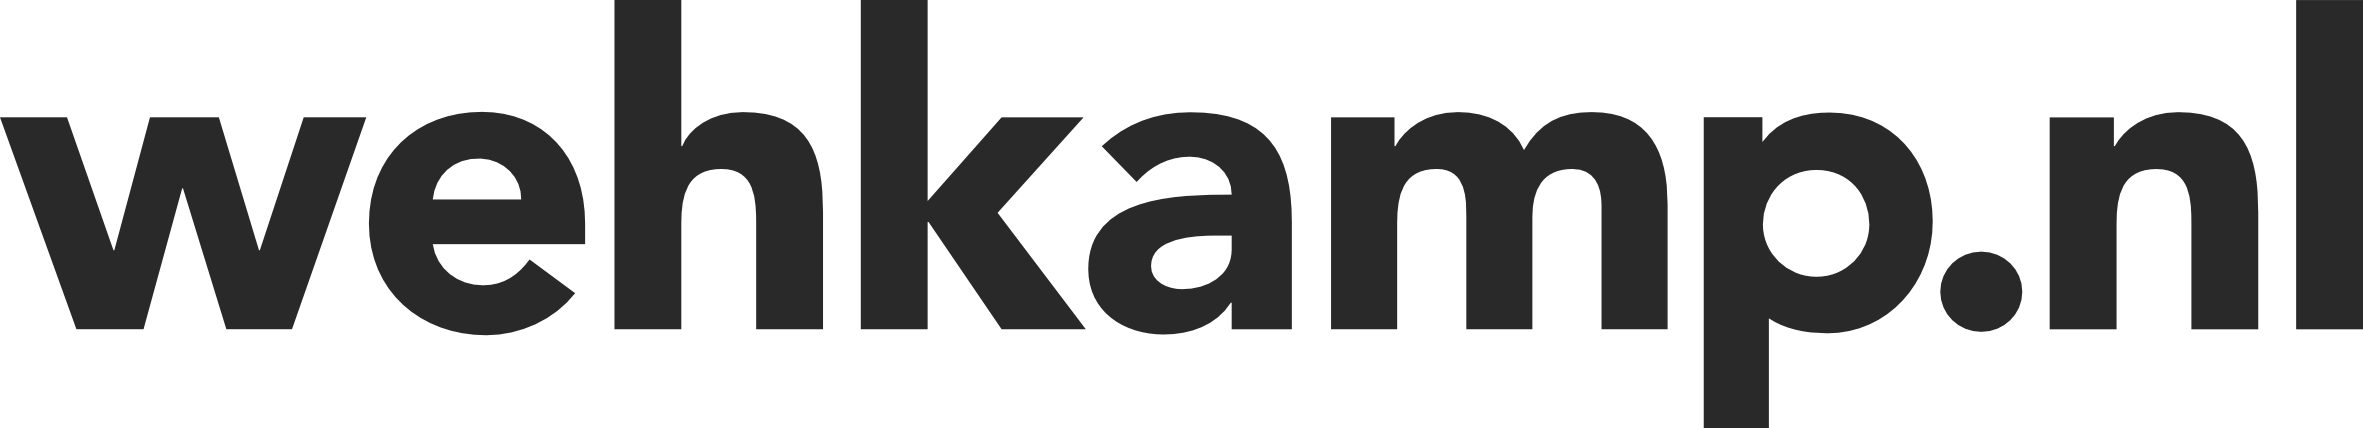 Wehkamp logo.